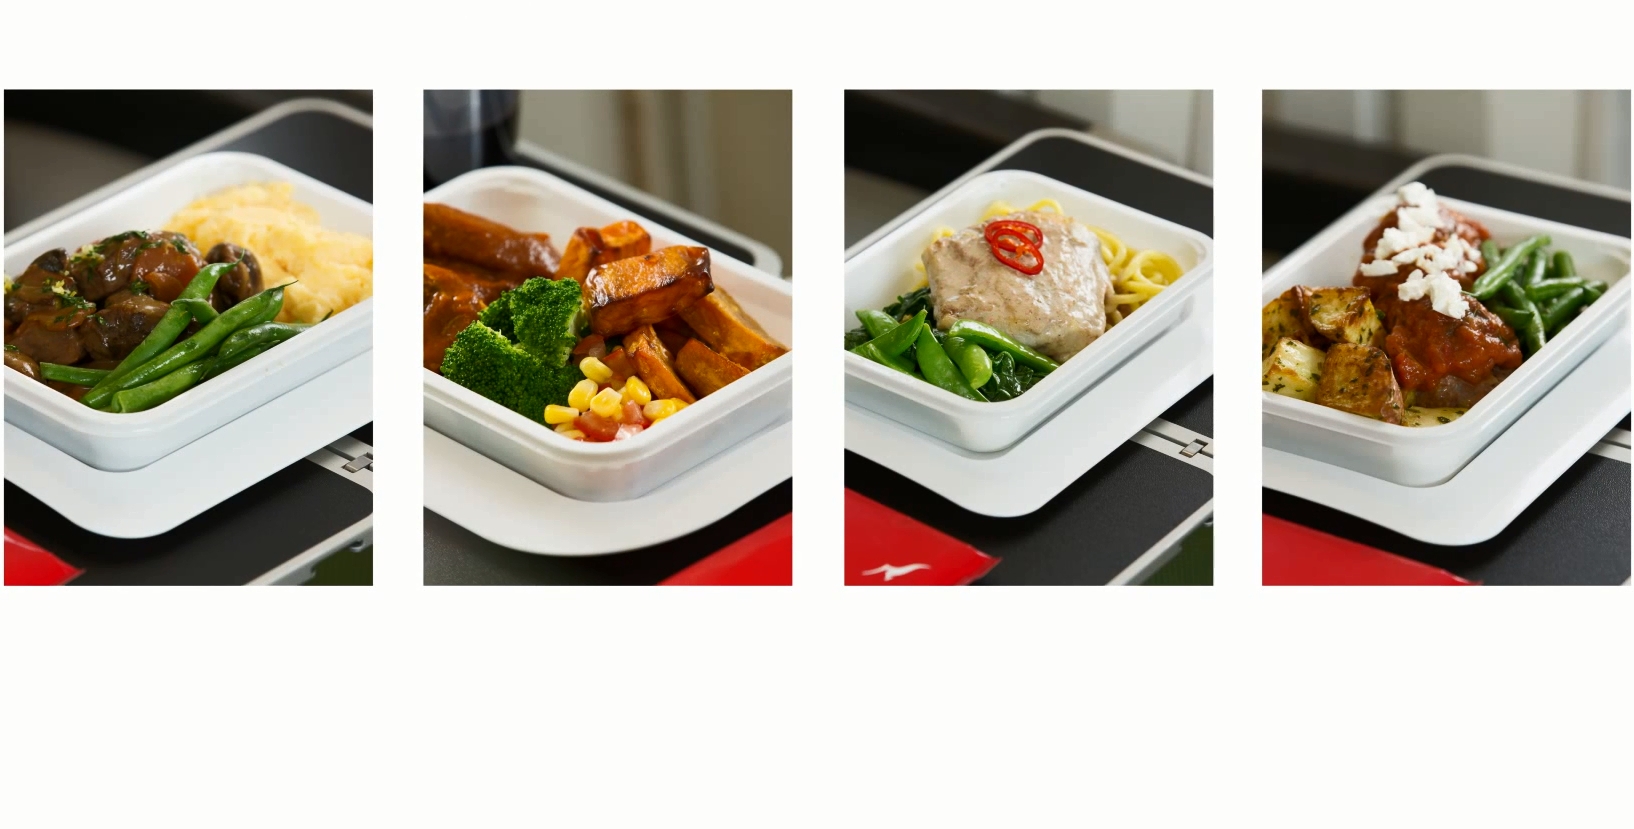 Qantas – The New International Economy Class Dining Experience